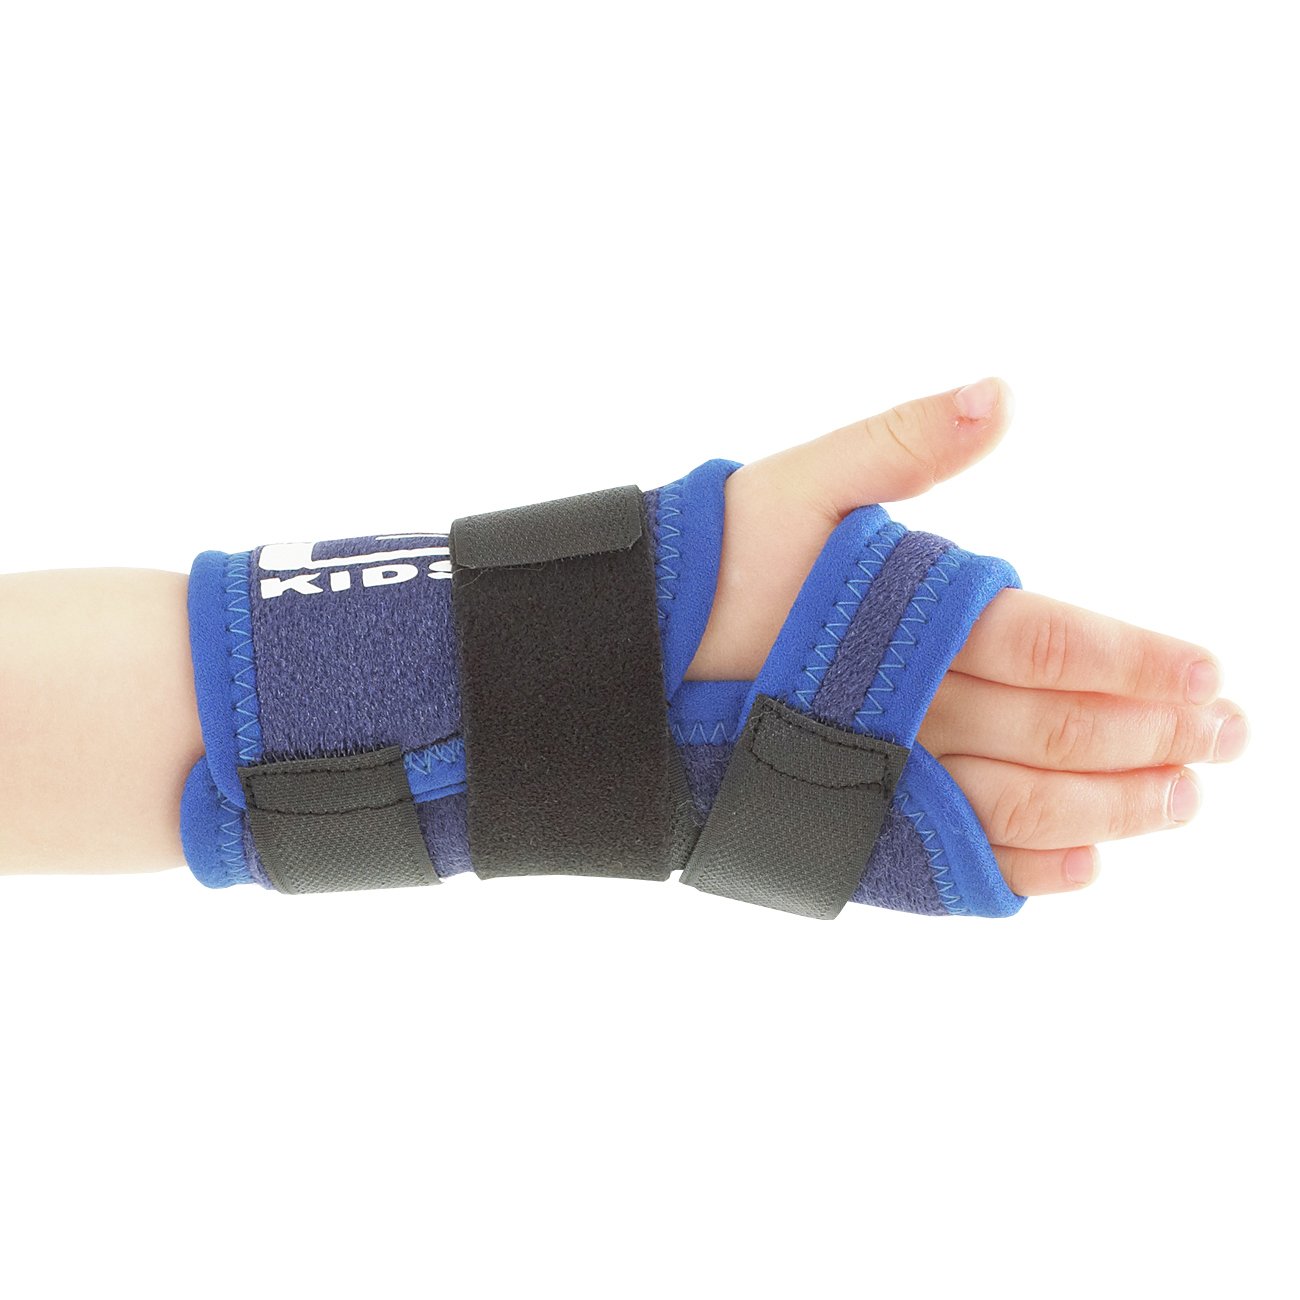 Neo G Kids Stabilised Wrist Support - Left